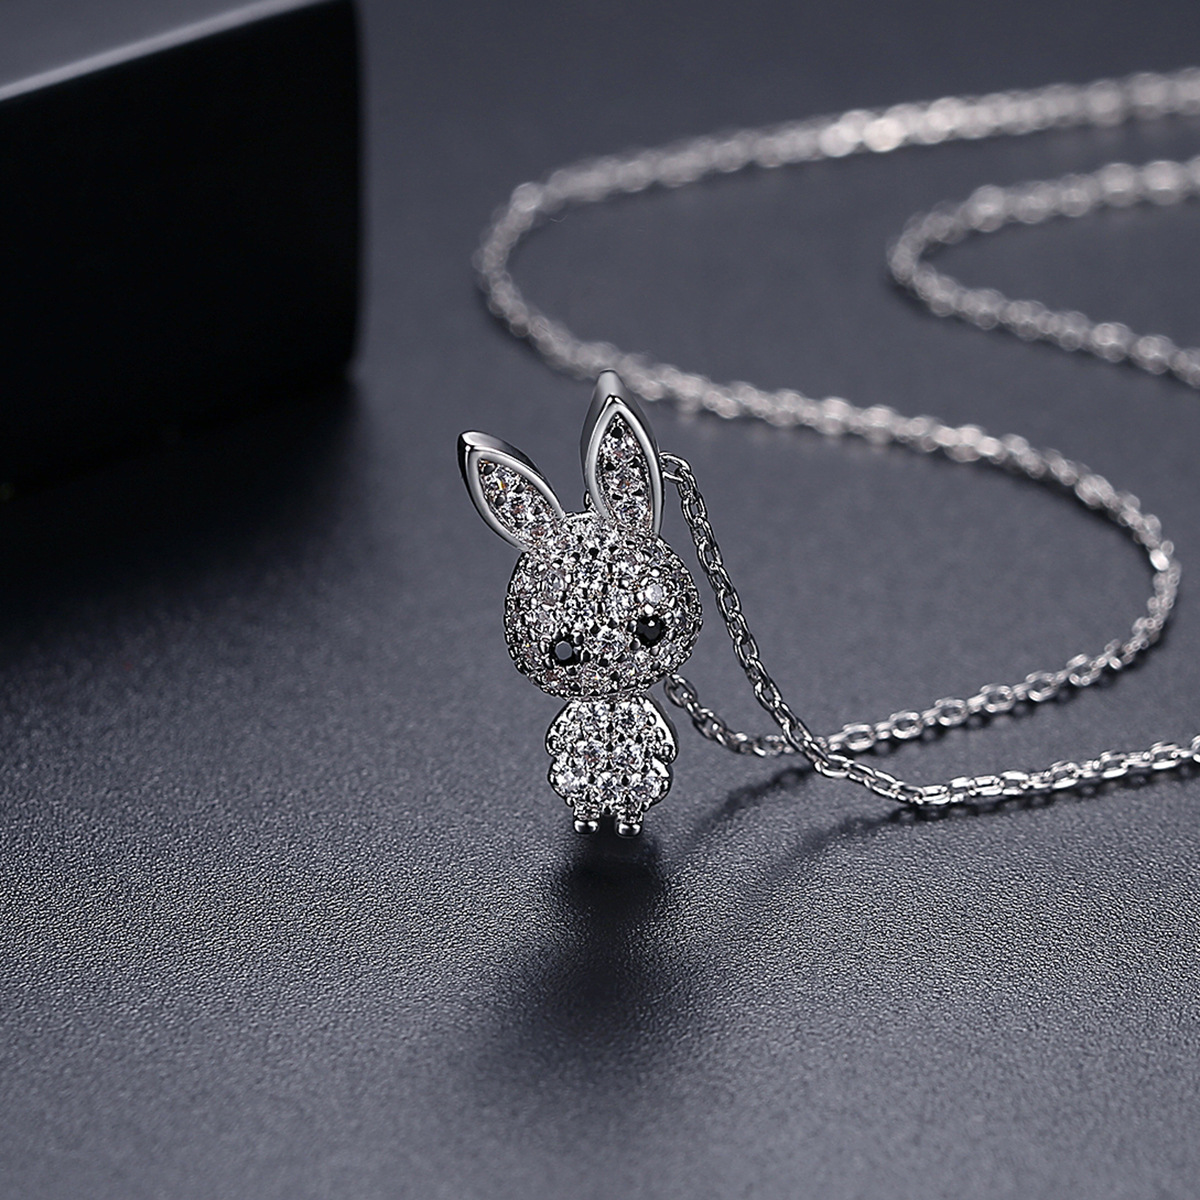 Rabbit pendant chain accessories Korean style short clavicle